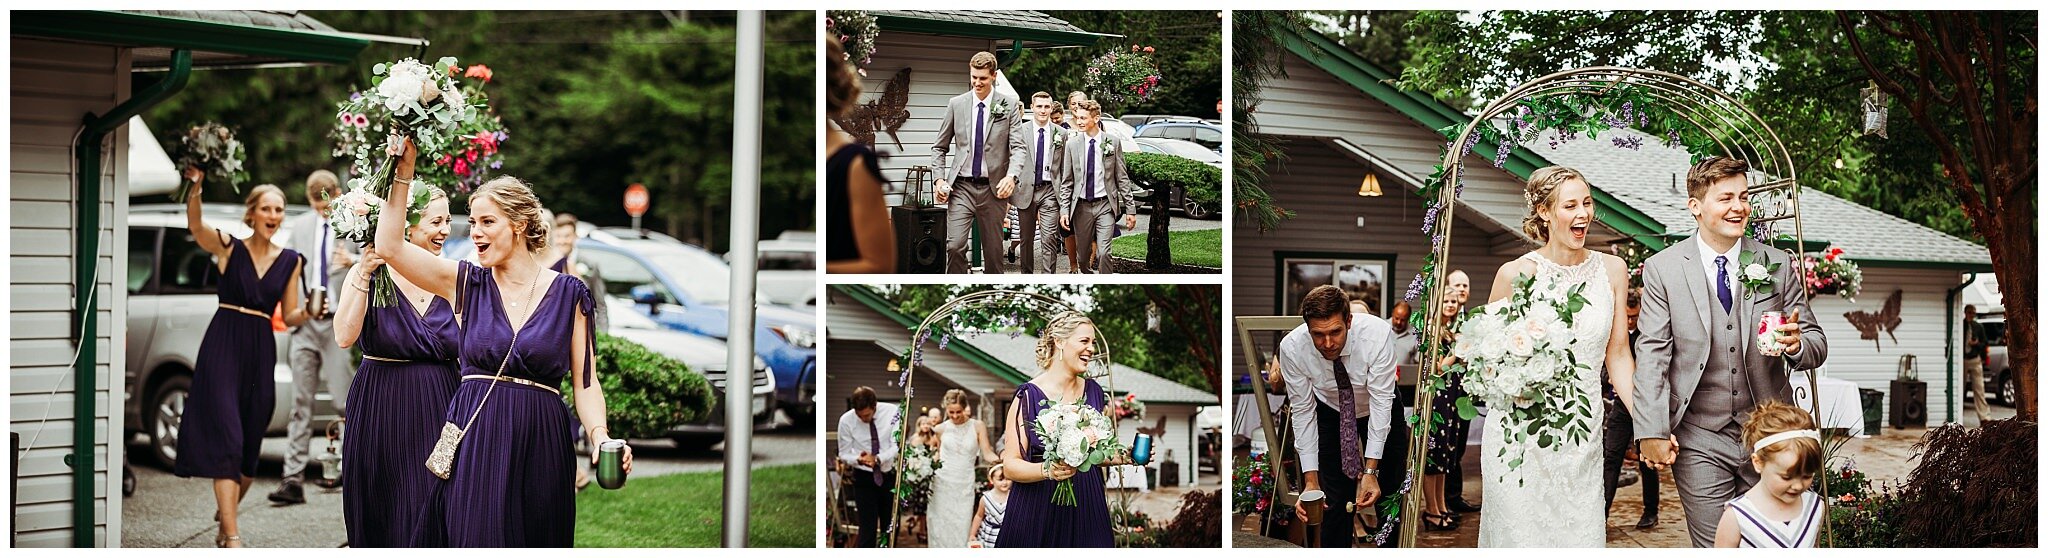 Langley-Backyard-Wedding-Reception-photographer (7).jpg